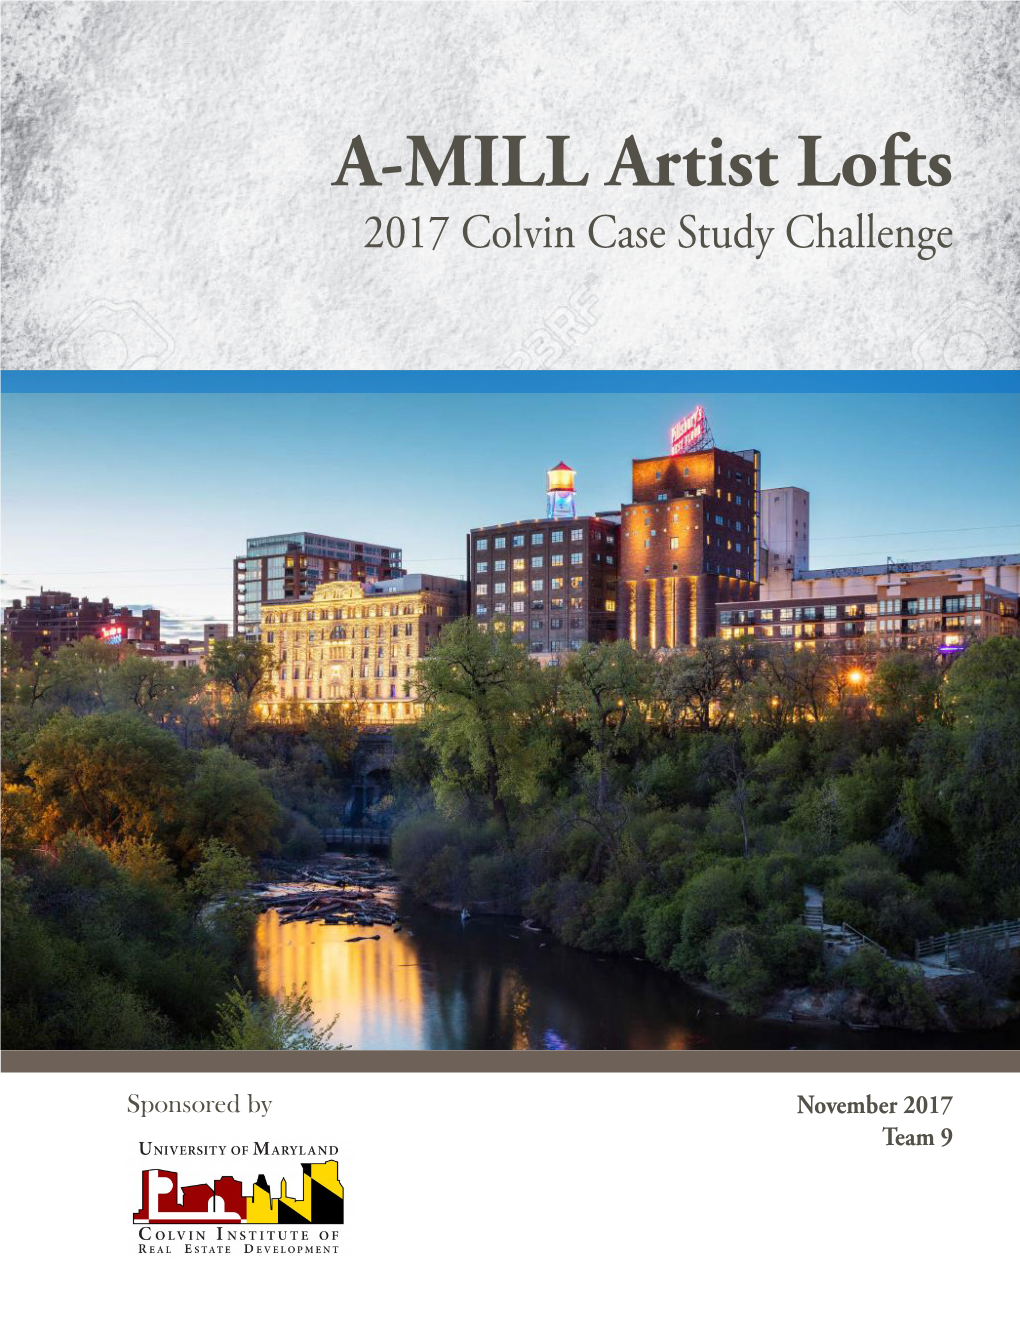 A-MILL Artist Lofts 2017 Colvin Case Study Challenge